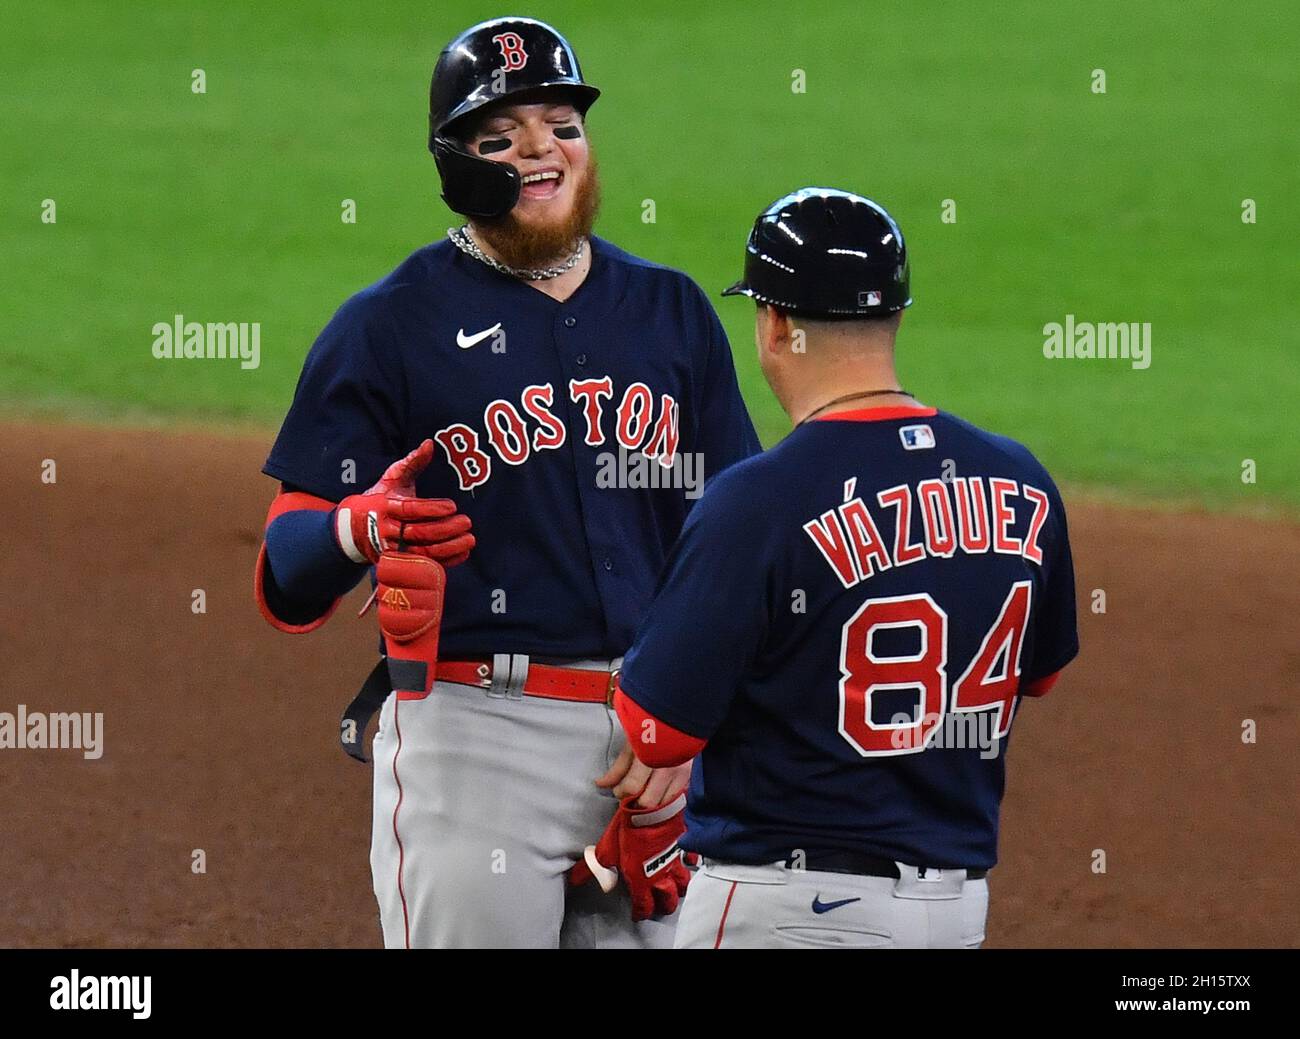 Boston Red Sox vs Houston Astros - October 16, 2021